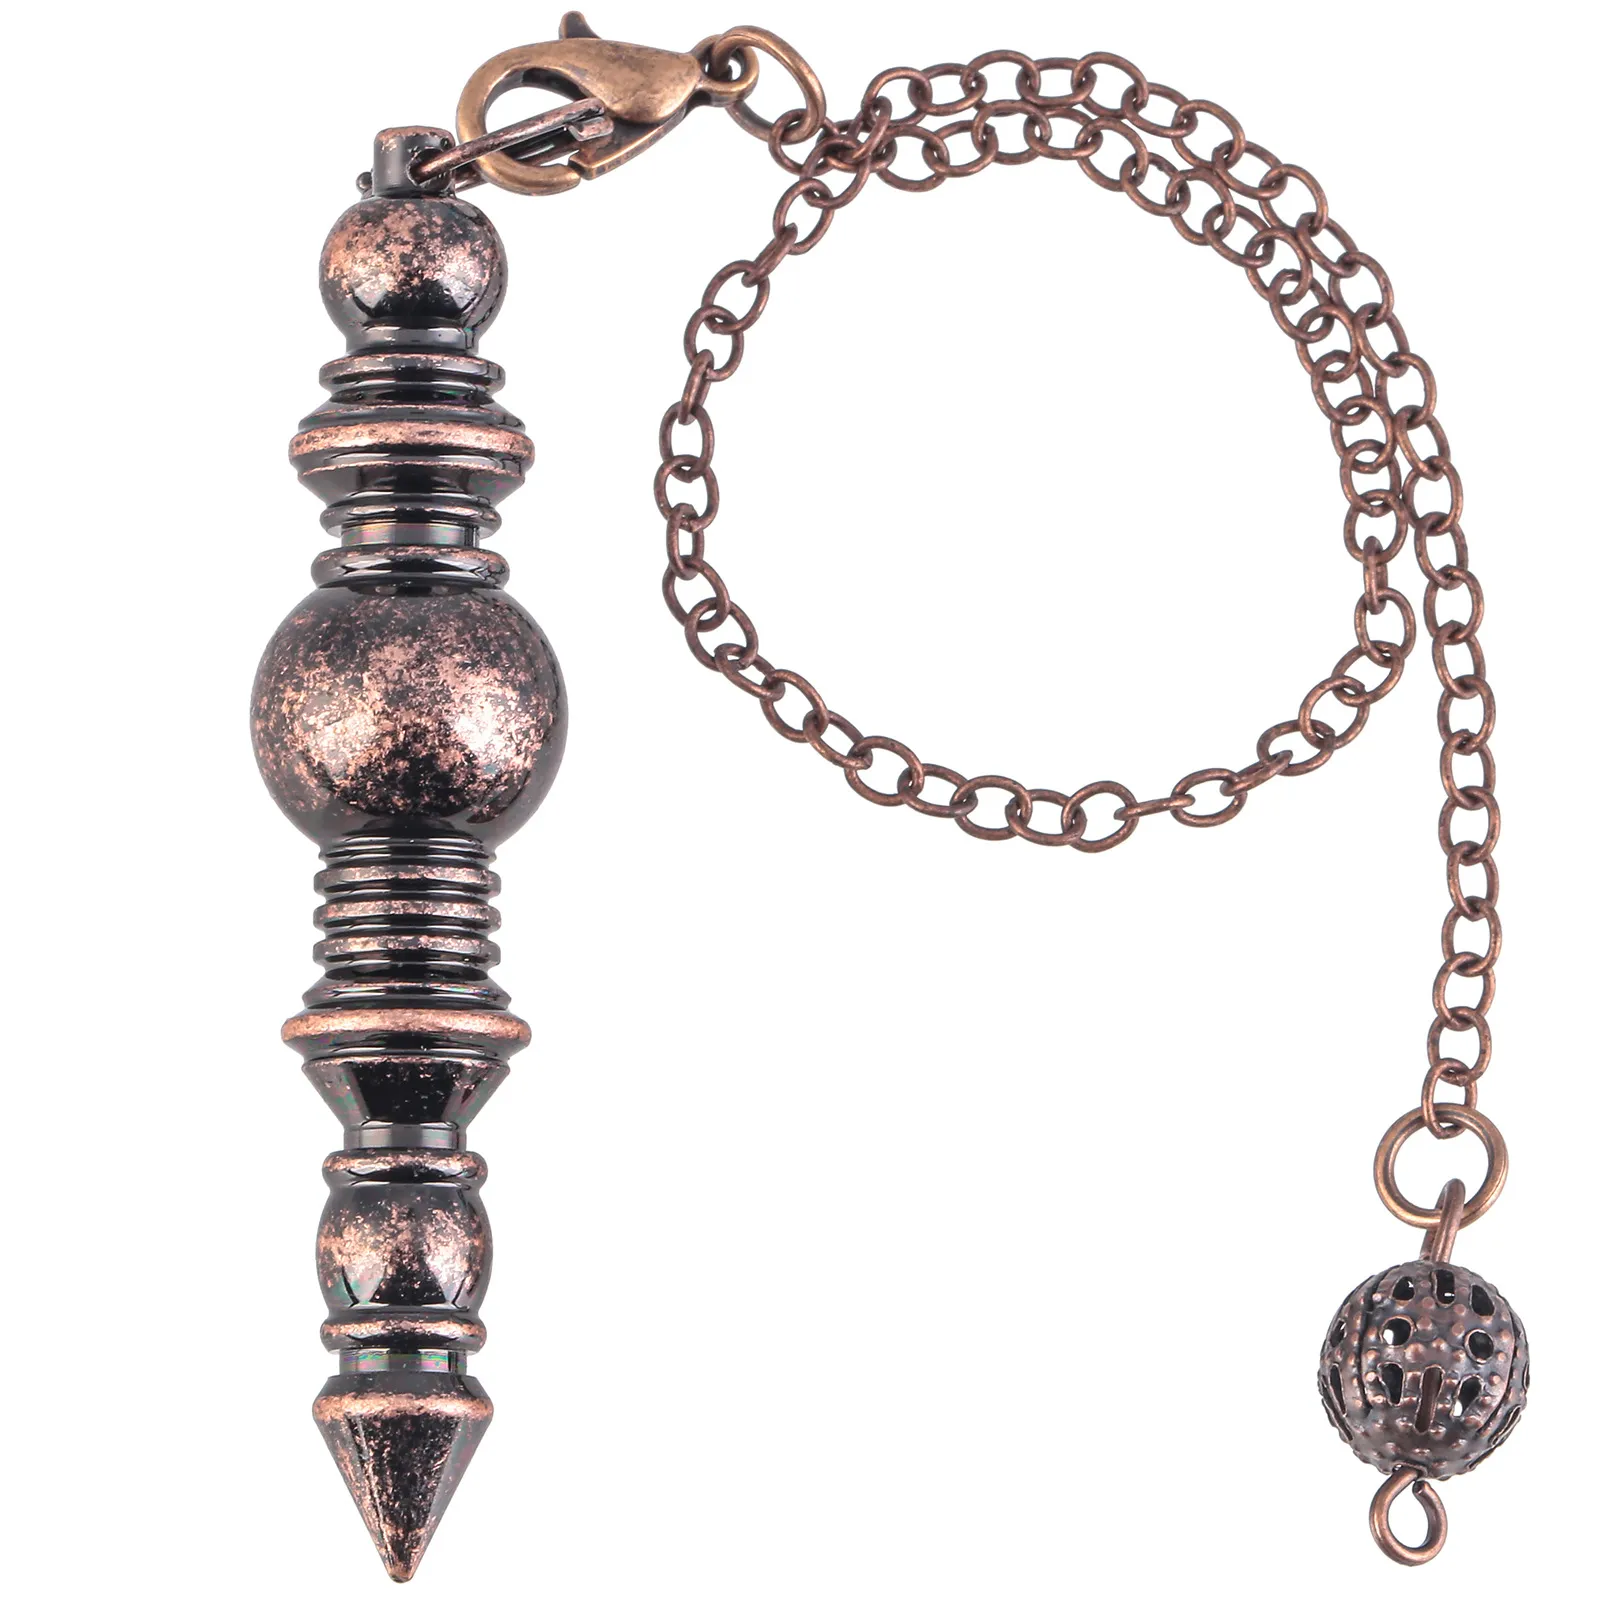 Wicca Copper Metal Pendulum Pendant for Dowsing Divination Answers Questions Meditation Yoga Balancing Spiritual Pendulos X165